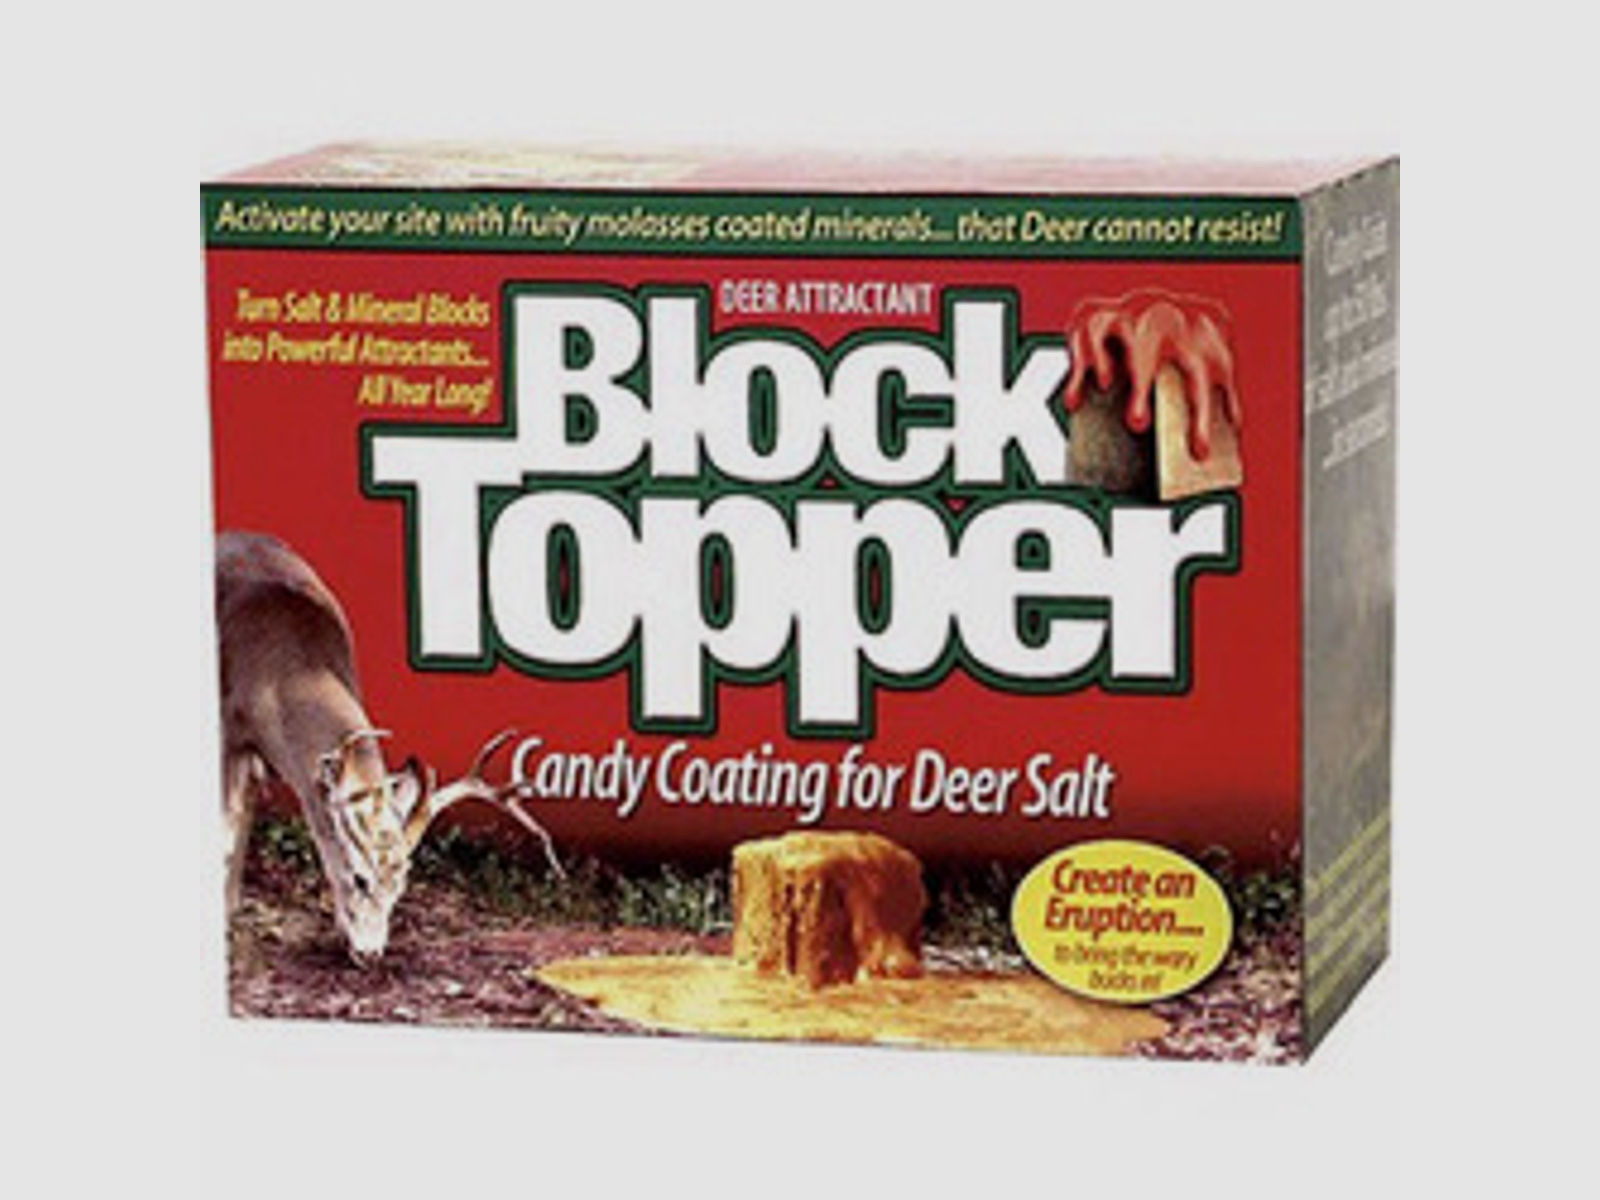 Block Topper